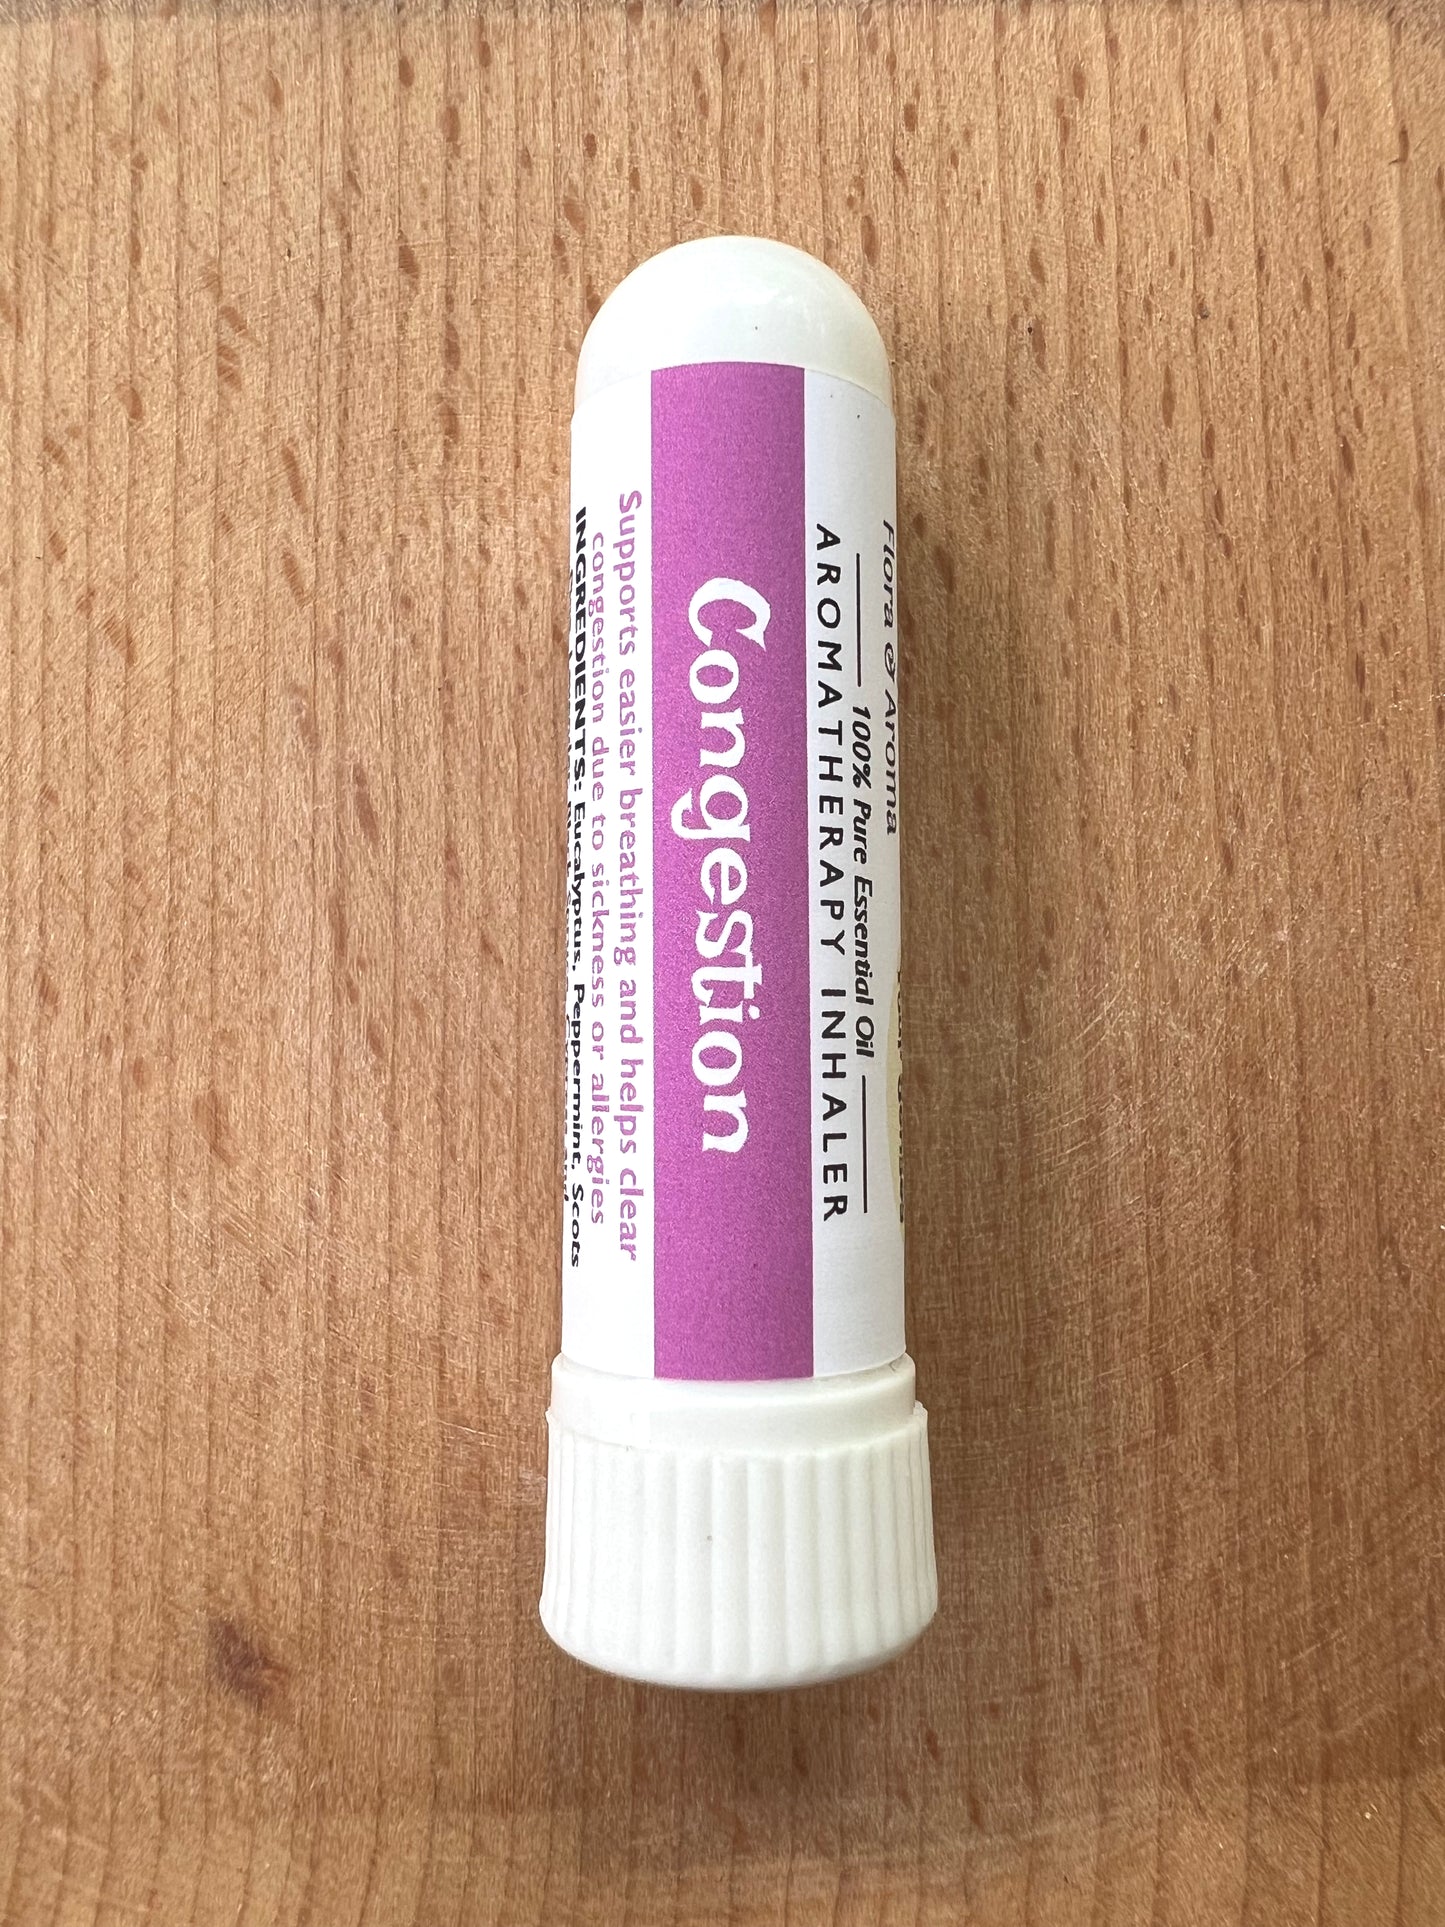 Congestion Essential Oil Aromatherapy Nasal Inhaler